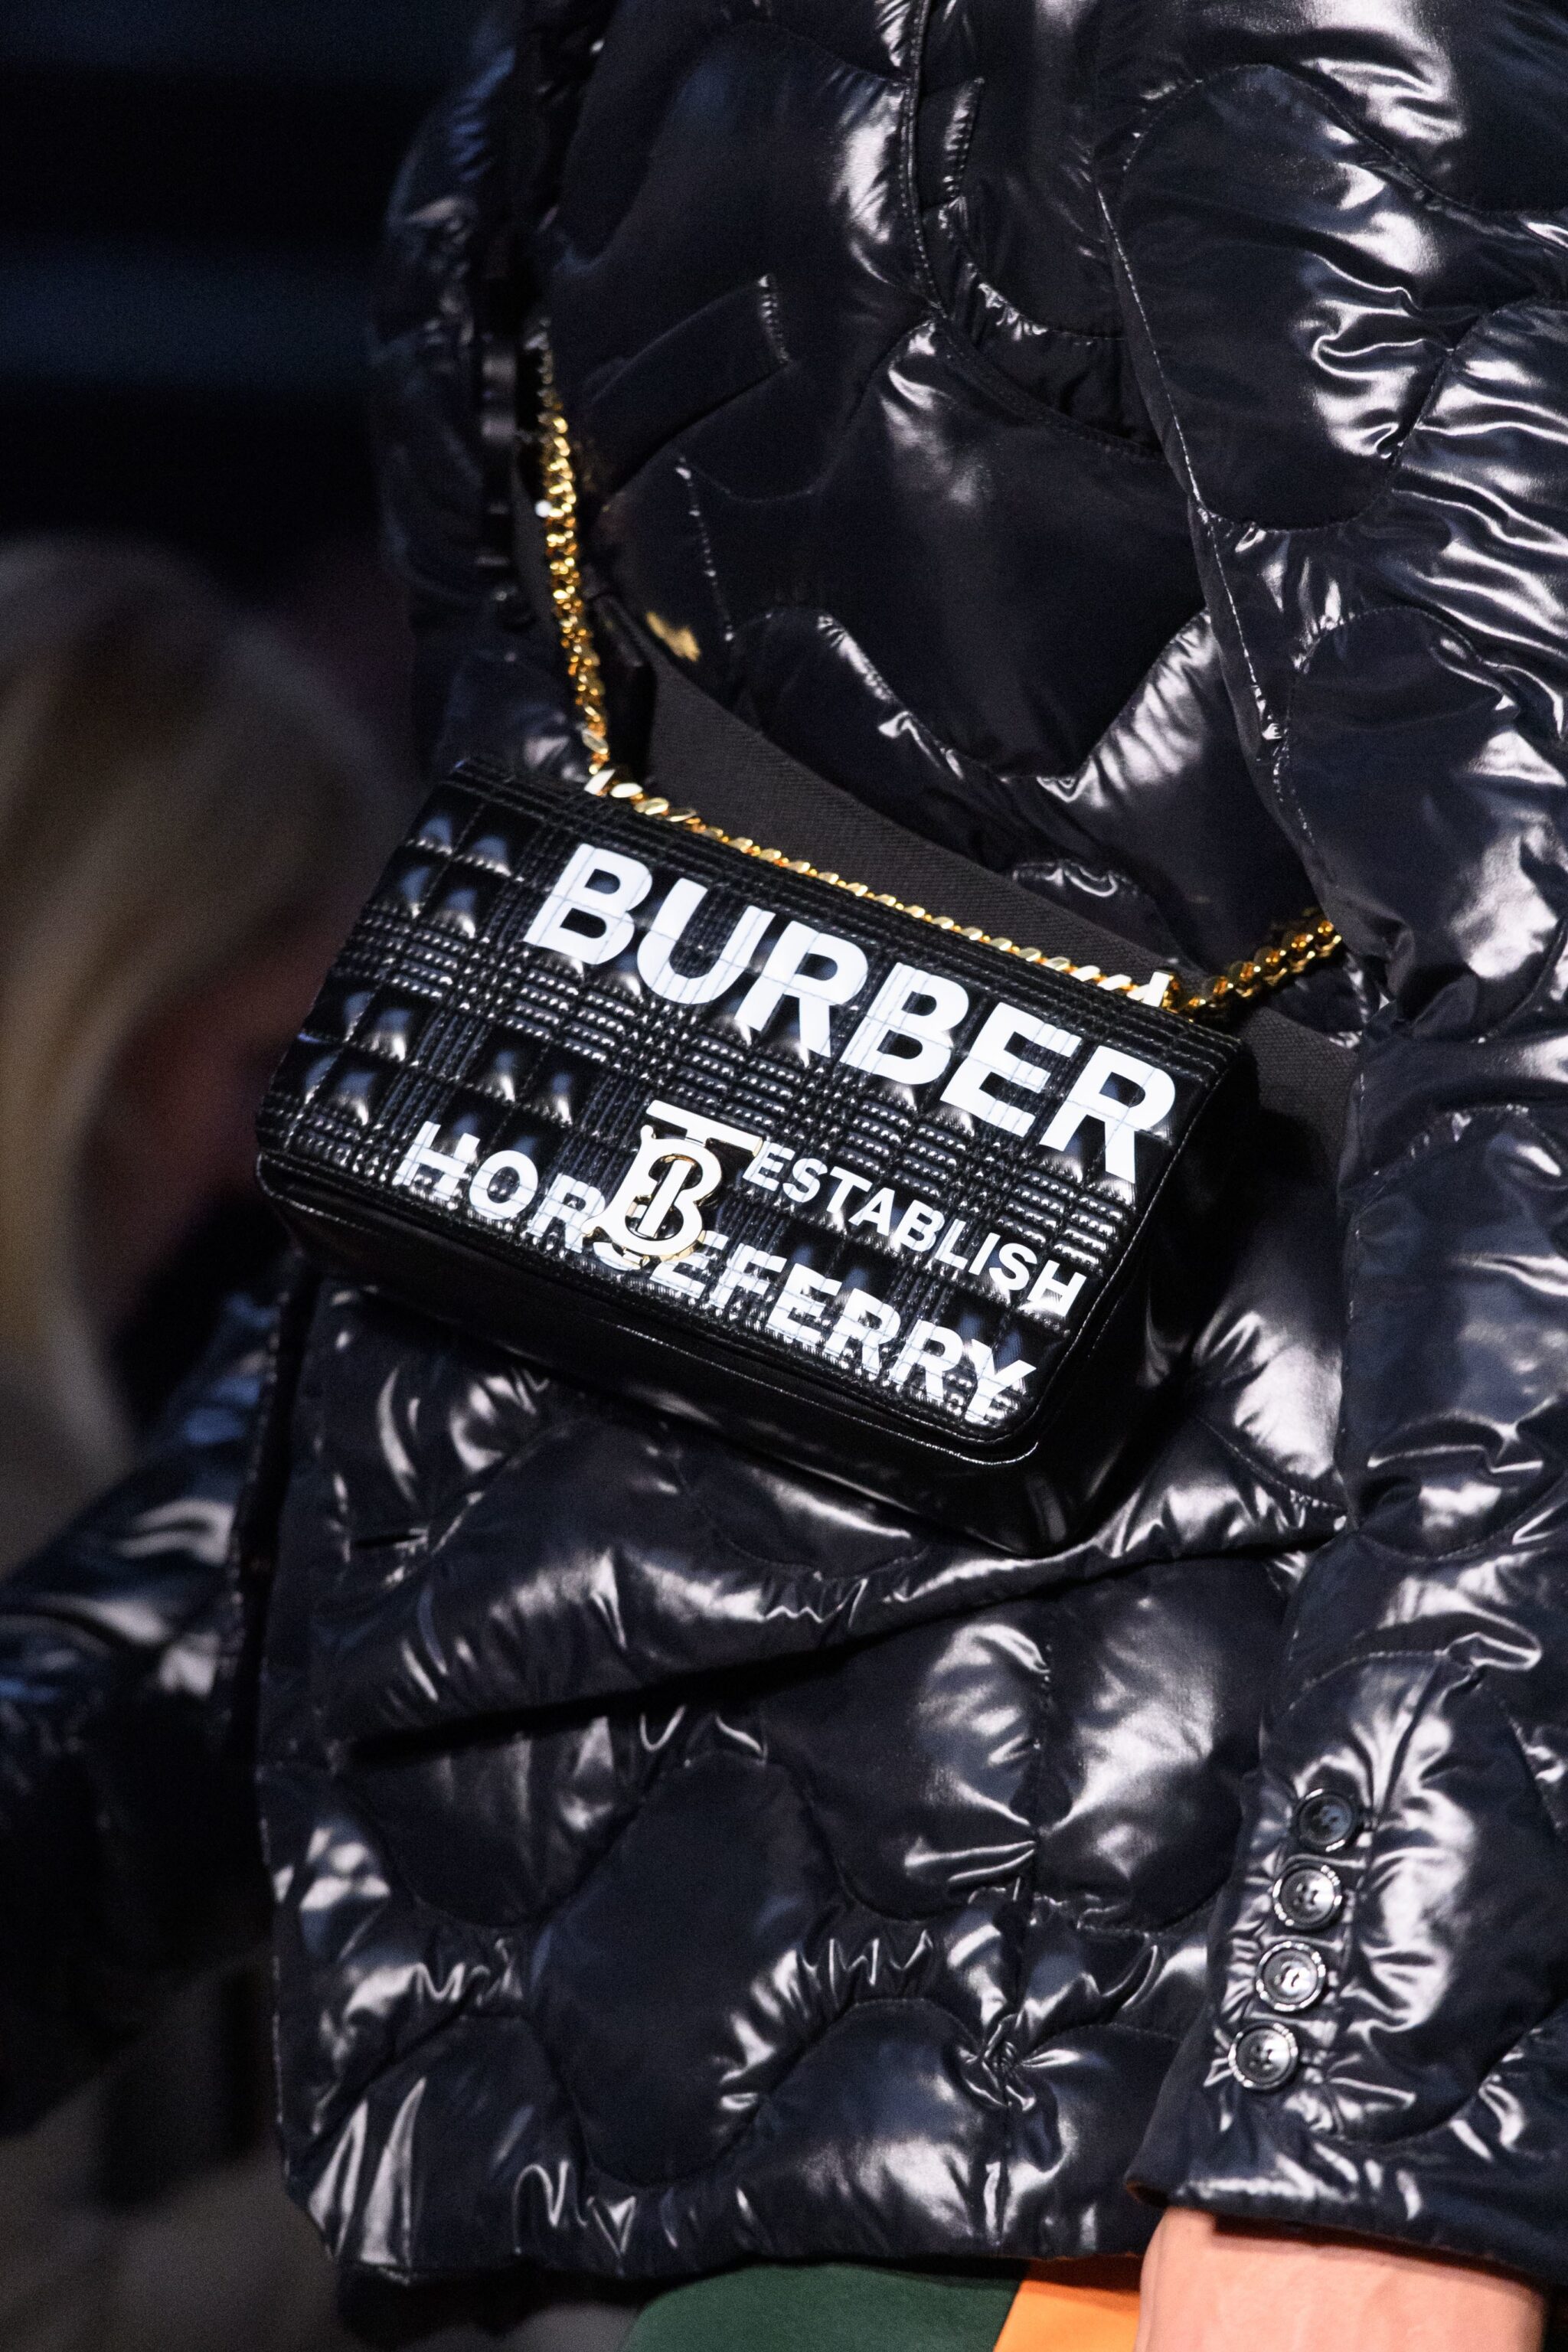 Burberry Lola: the new Burberry Fall/Winter 2019 bag!